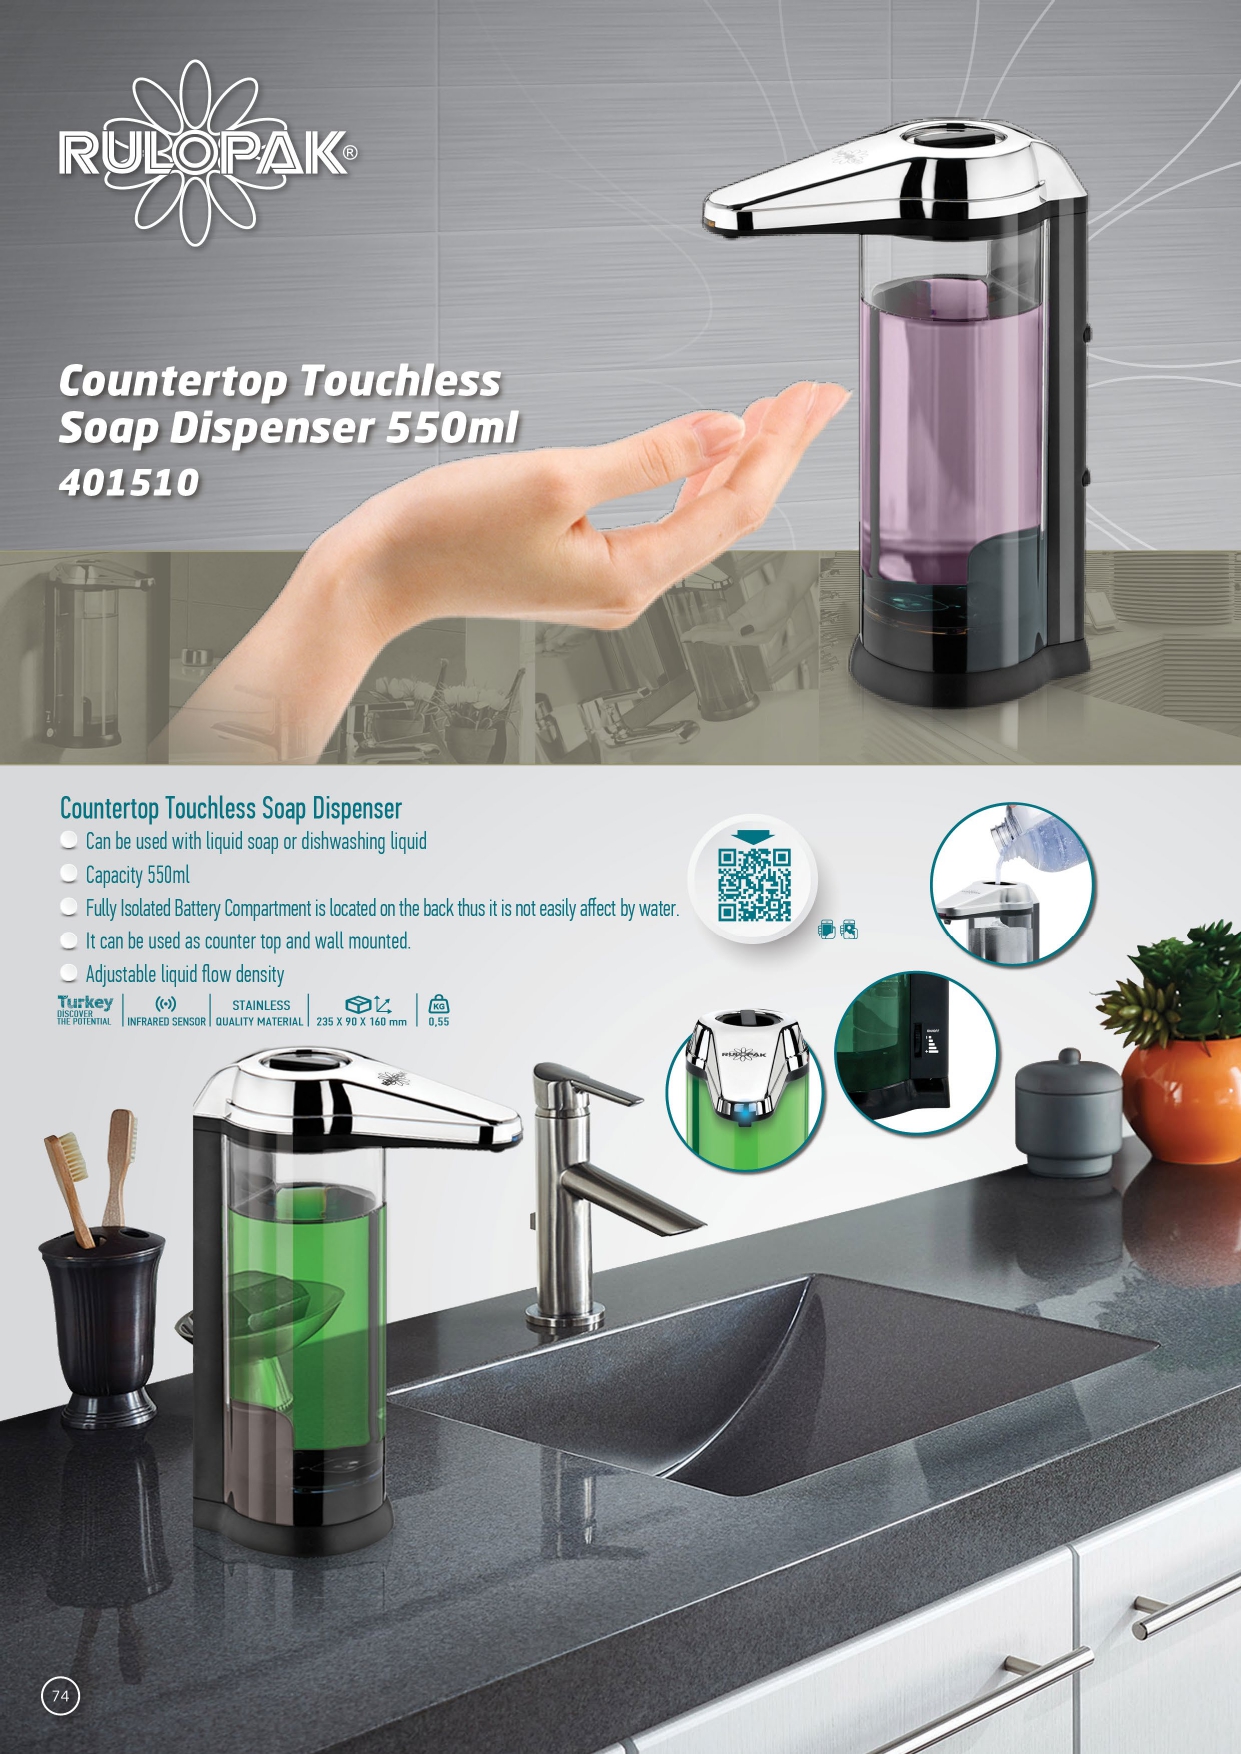 Premium Quality Dish Soap Dispenser - Countertop Kitchen Soap